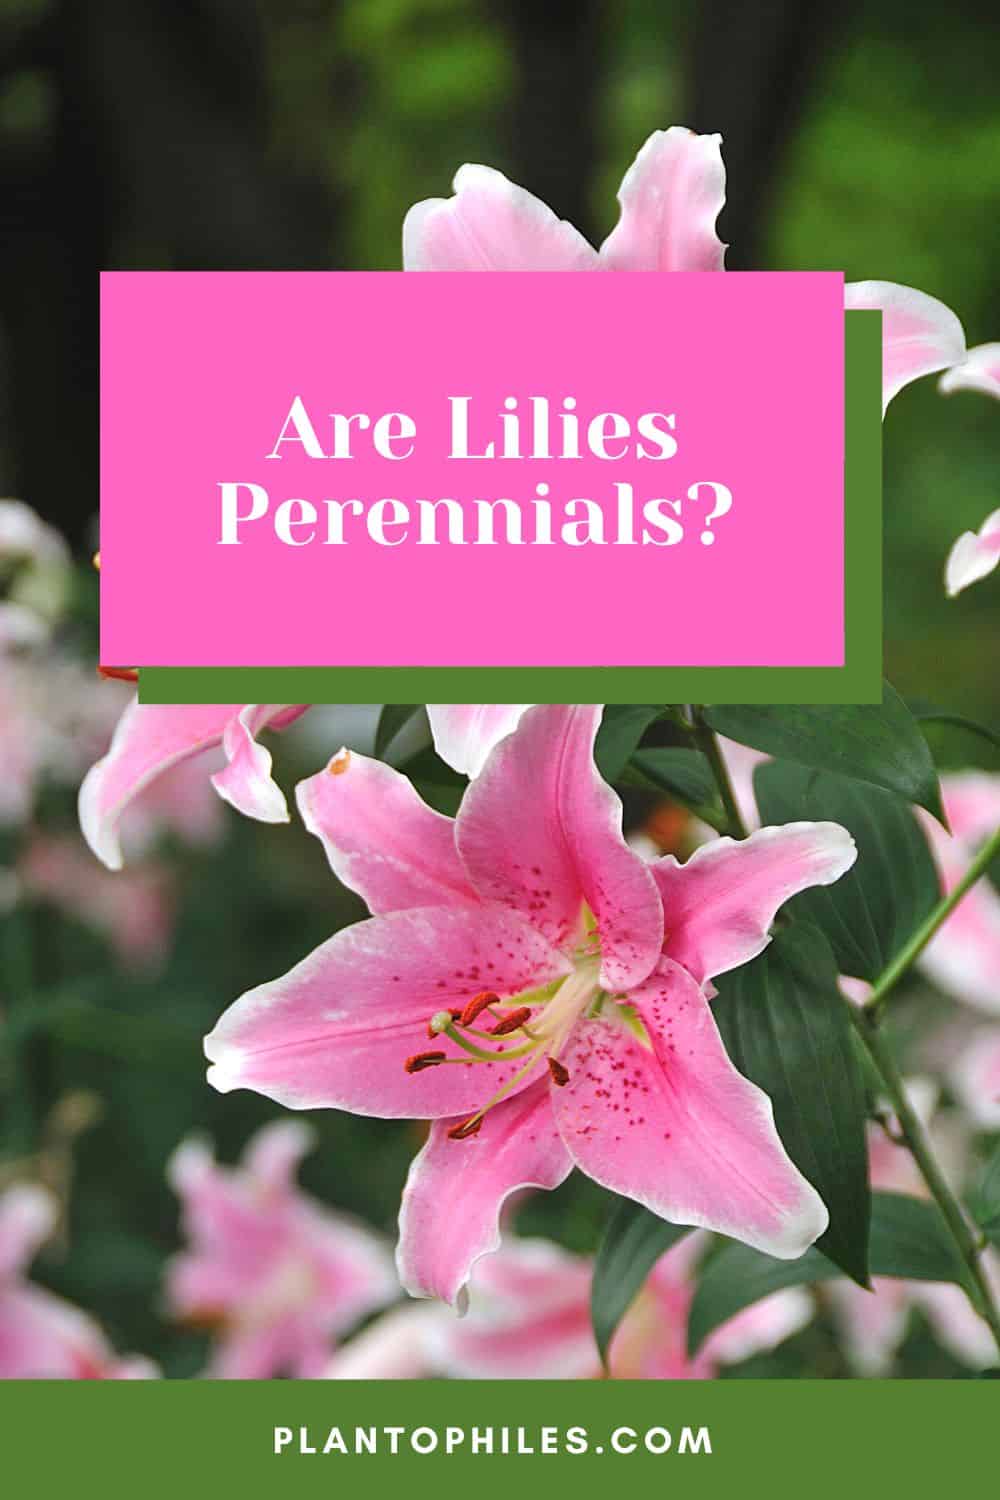 Are Lilies Perennials?